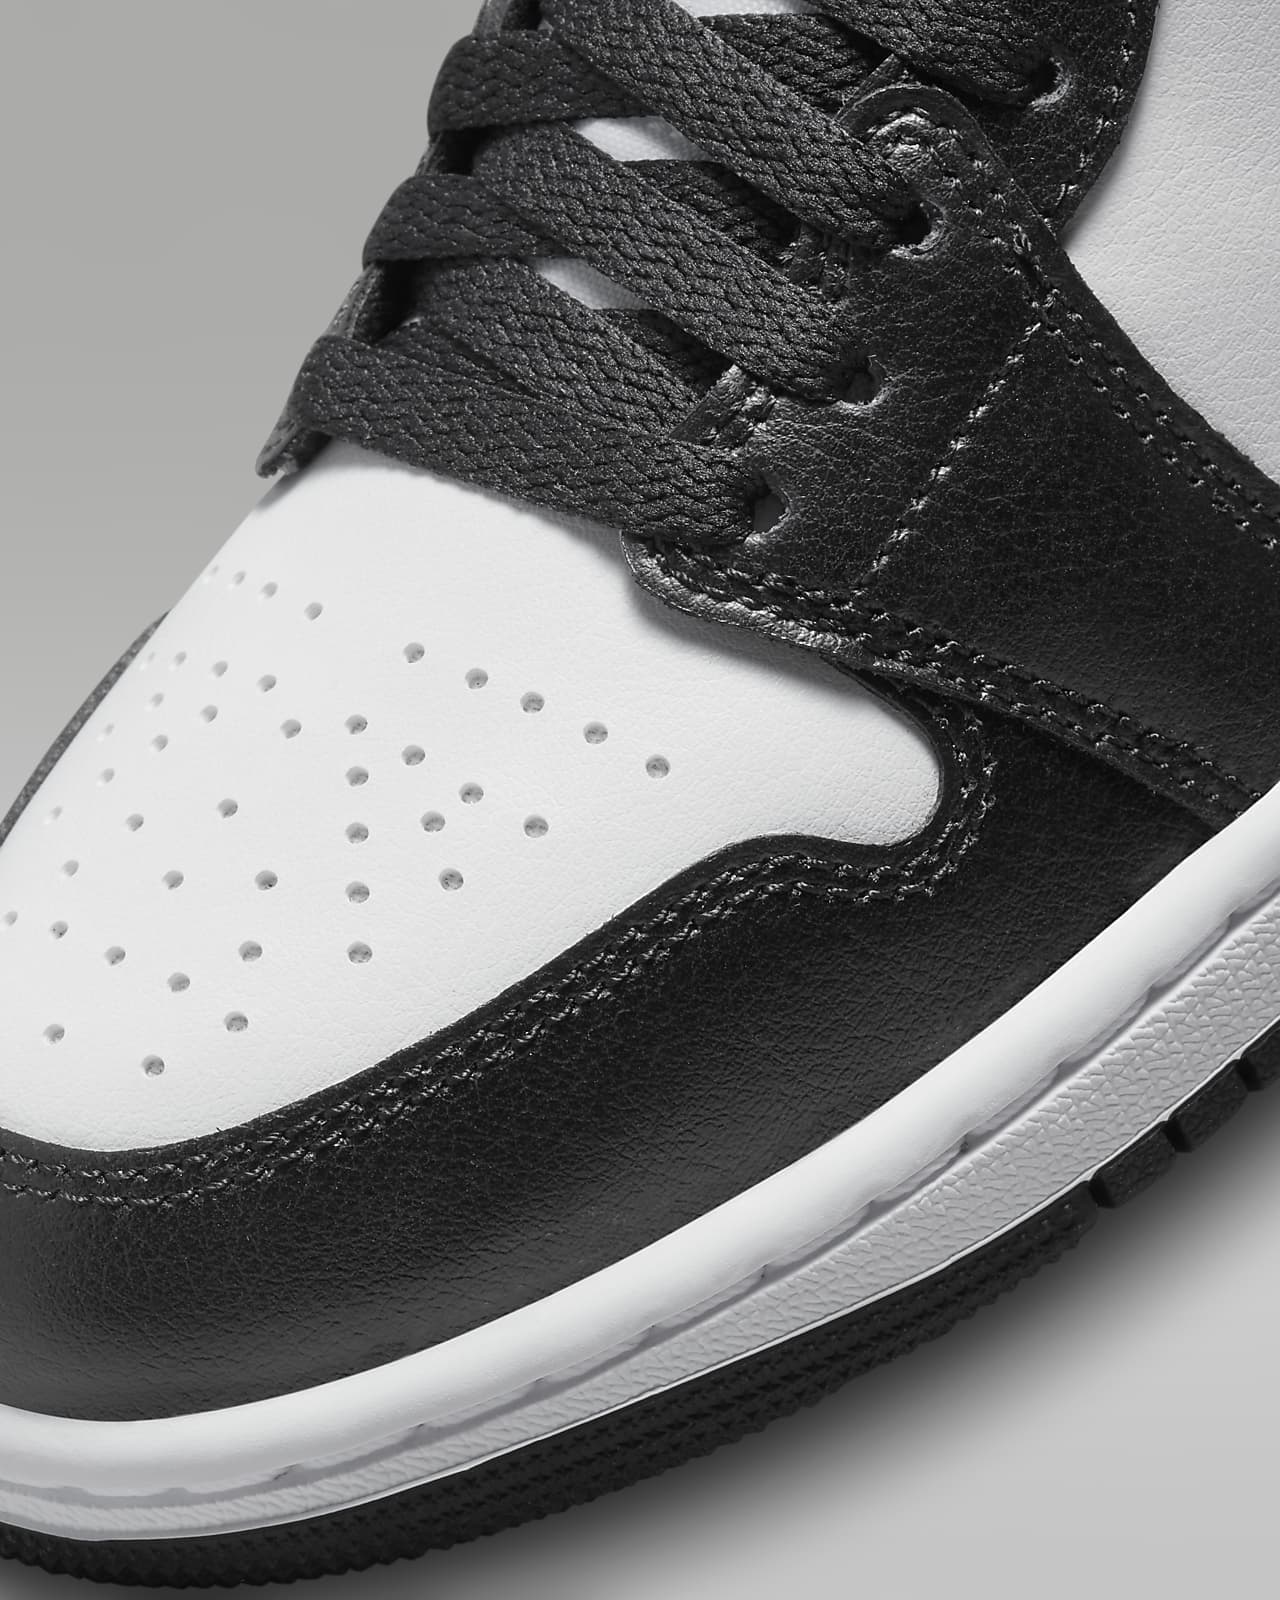 Nike Jordan Padded Shin Sleeves Adult Unisex S/M White/Black